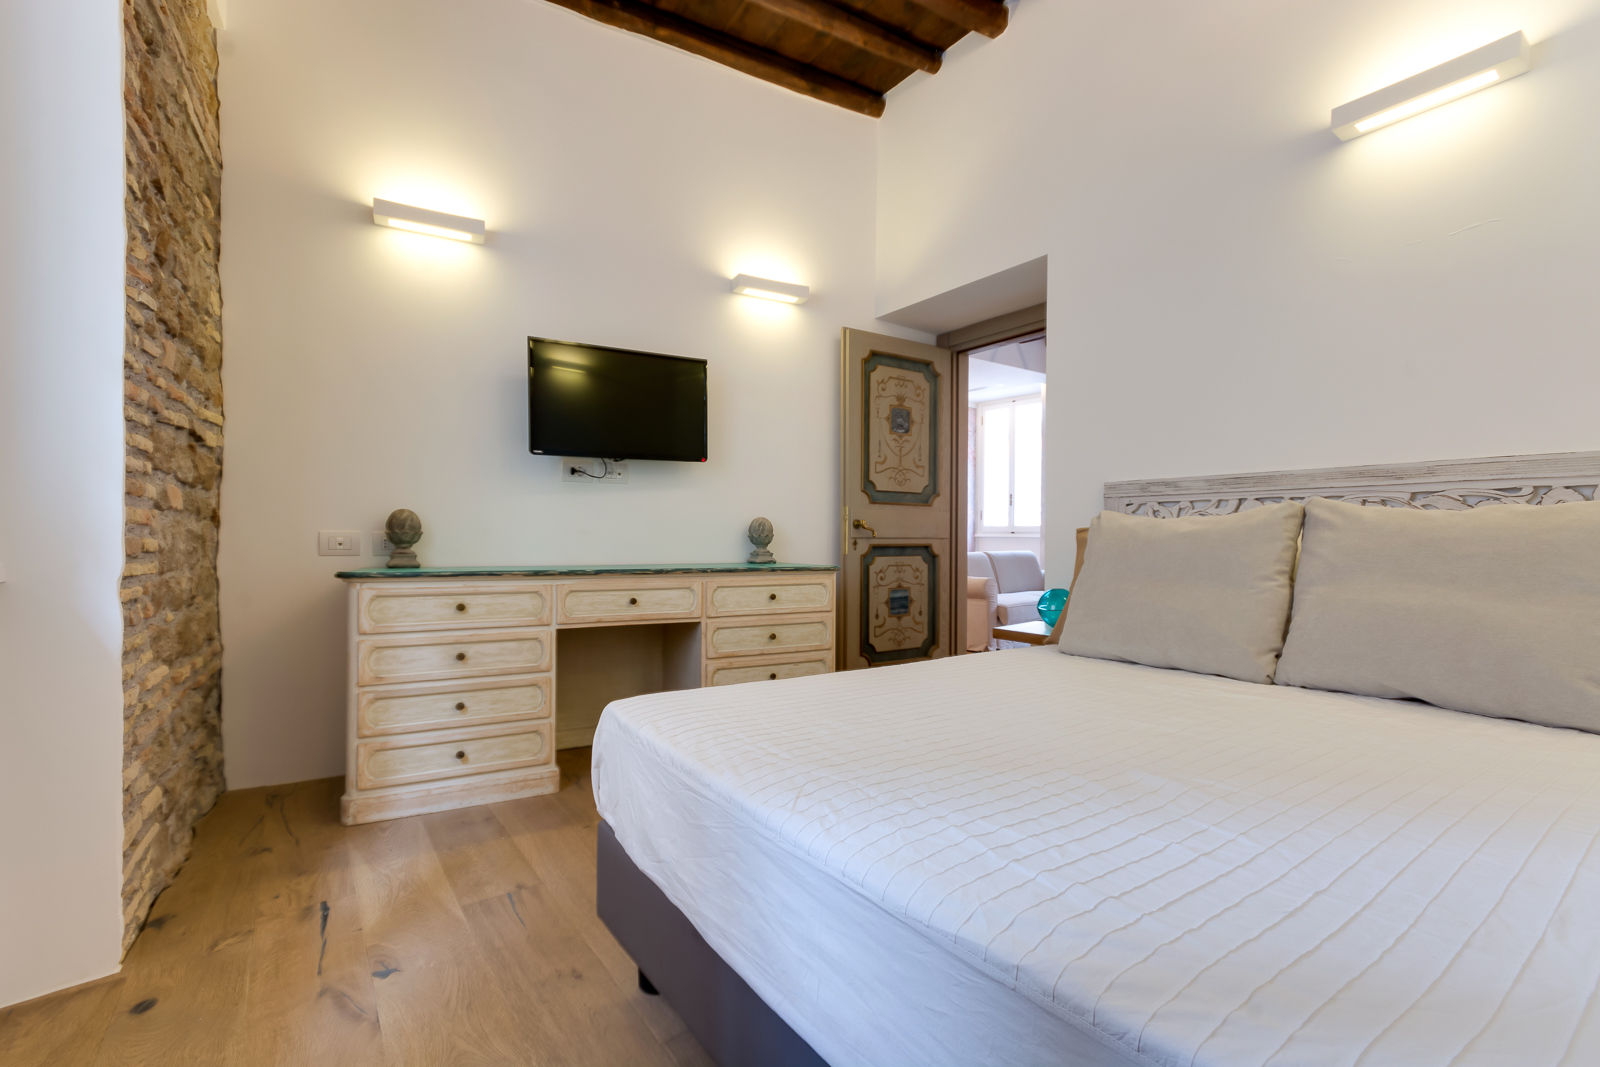 VIA SISTINA APT, SERENA ROMANO' ARCHITETTO SERENA ROMANO' ARCHITETTO Akdeniz Yatak Odası Yataklar & Yatak Başları